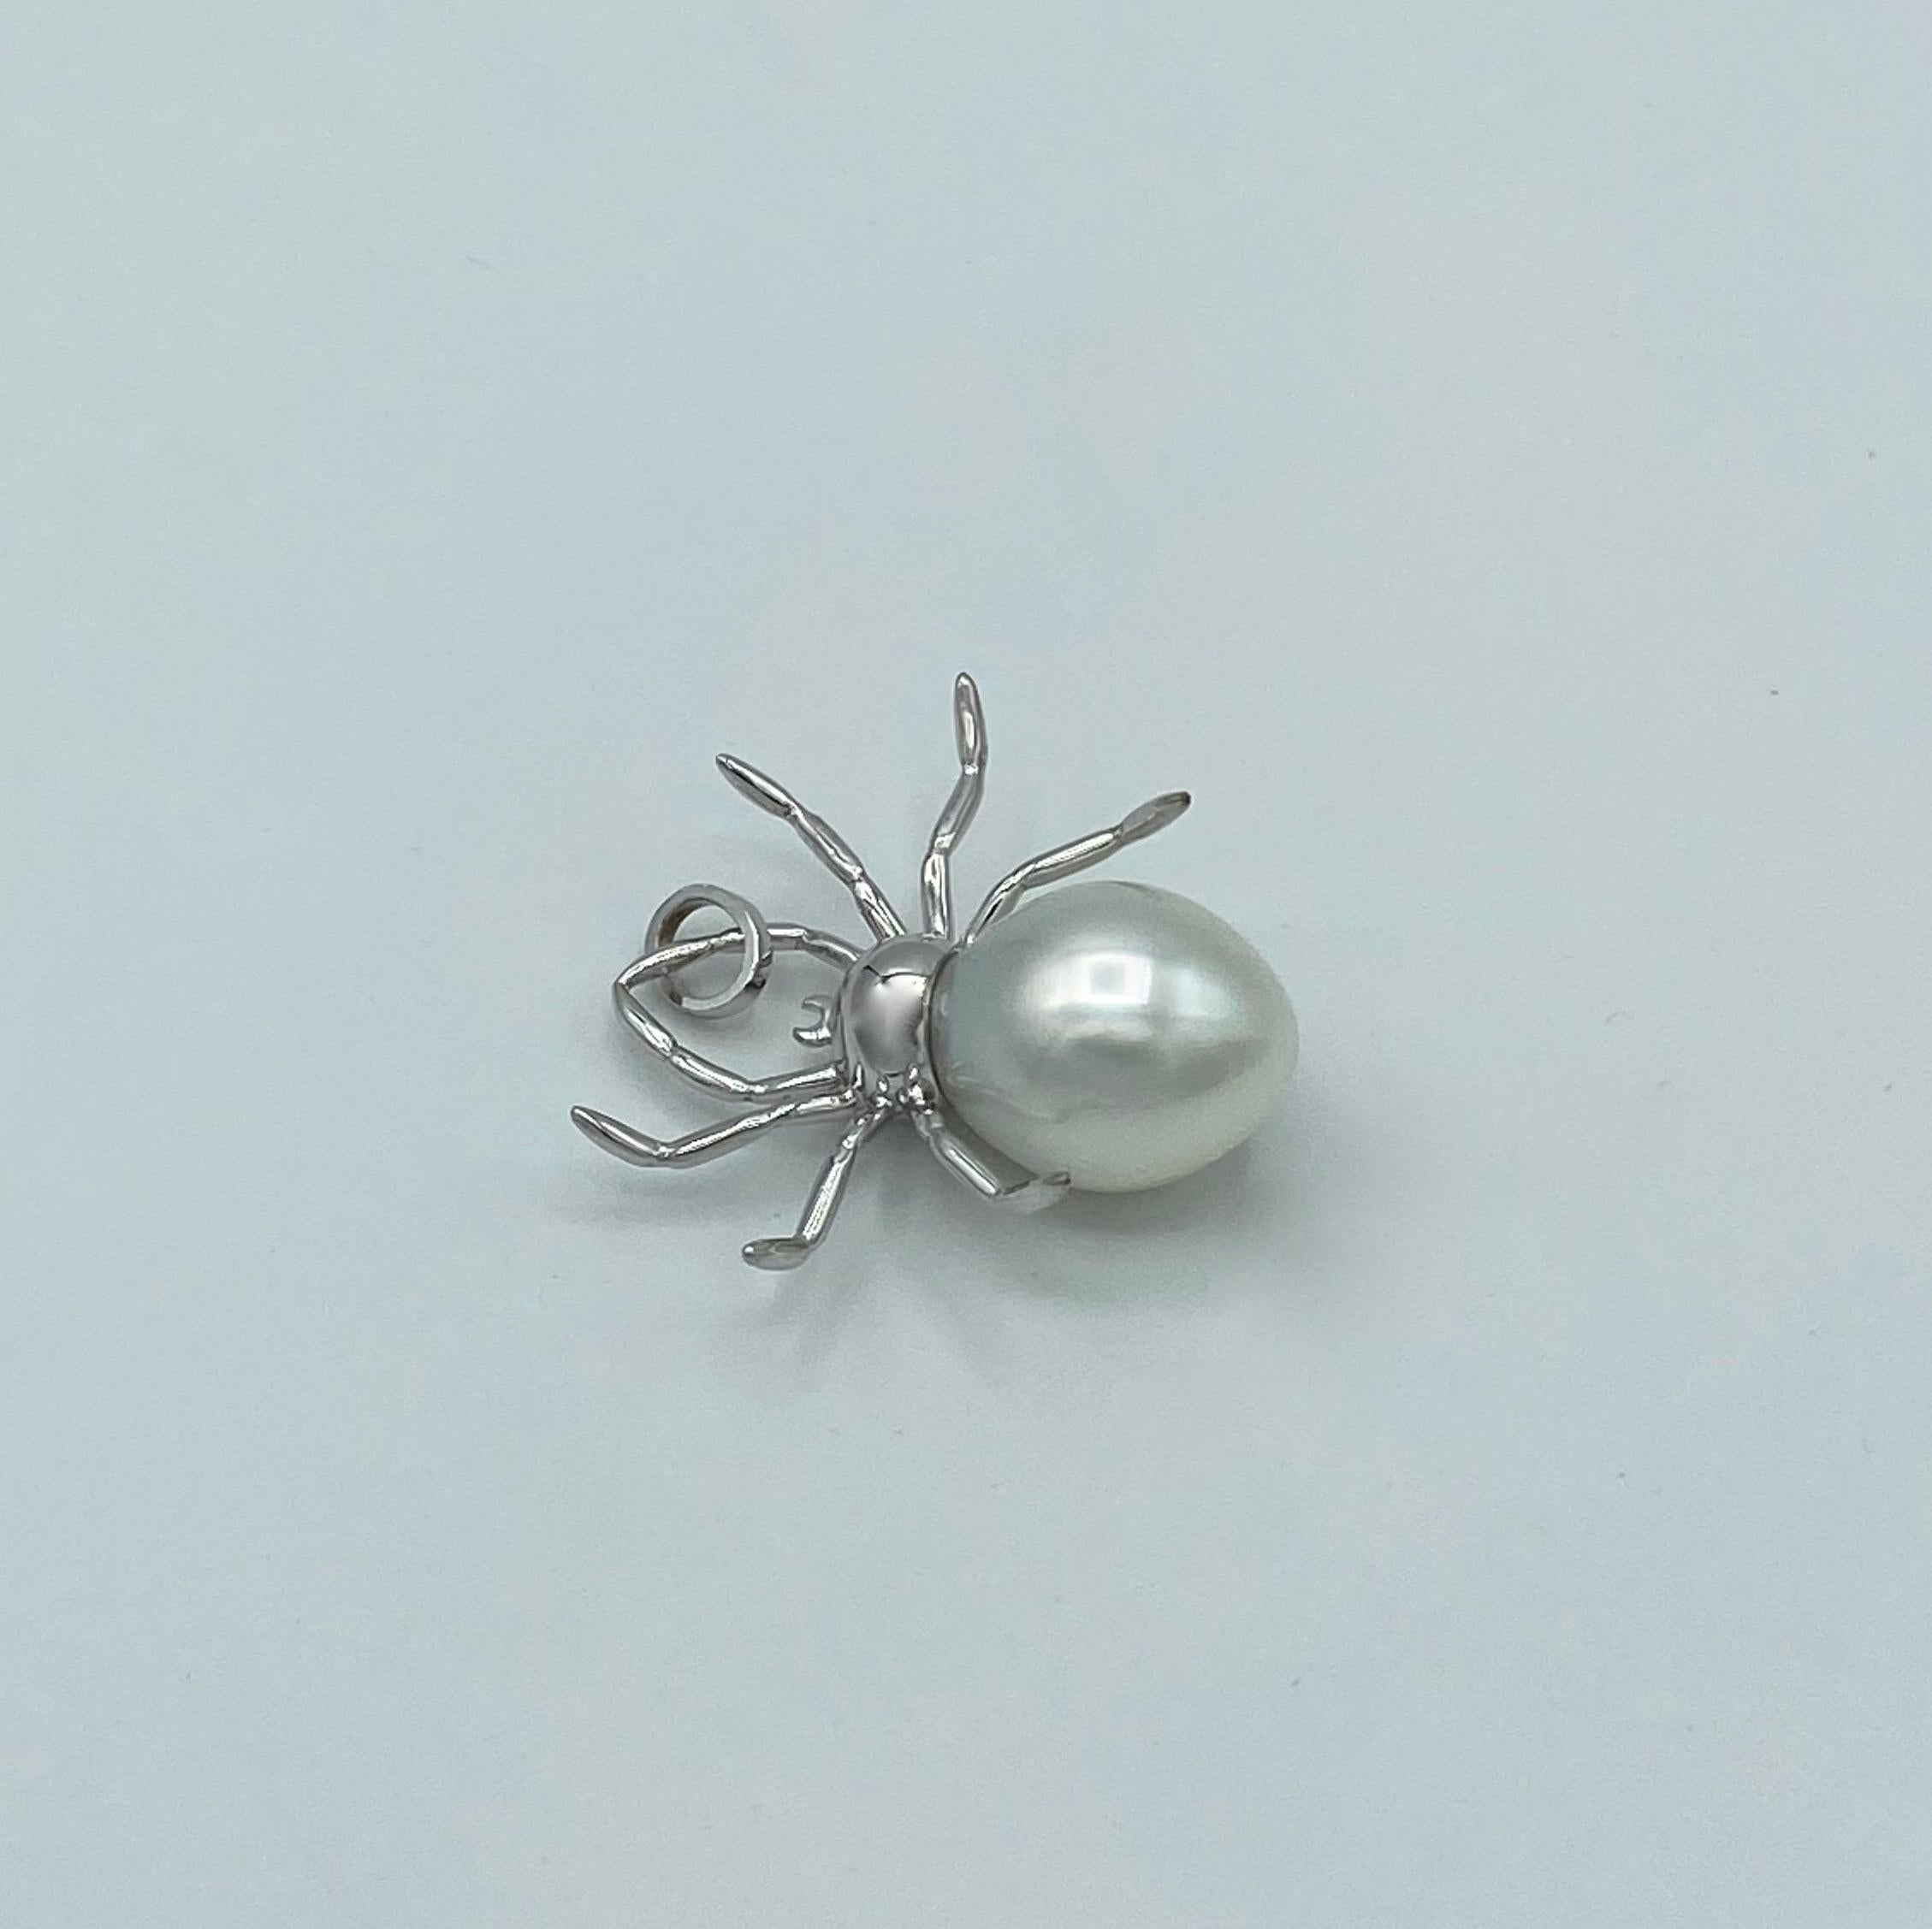 spider pendant necklace